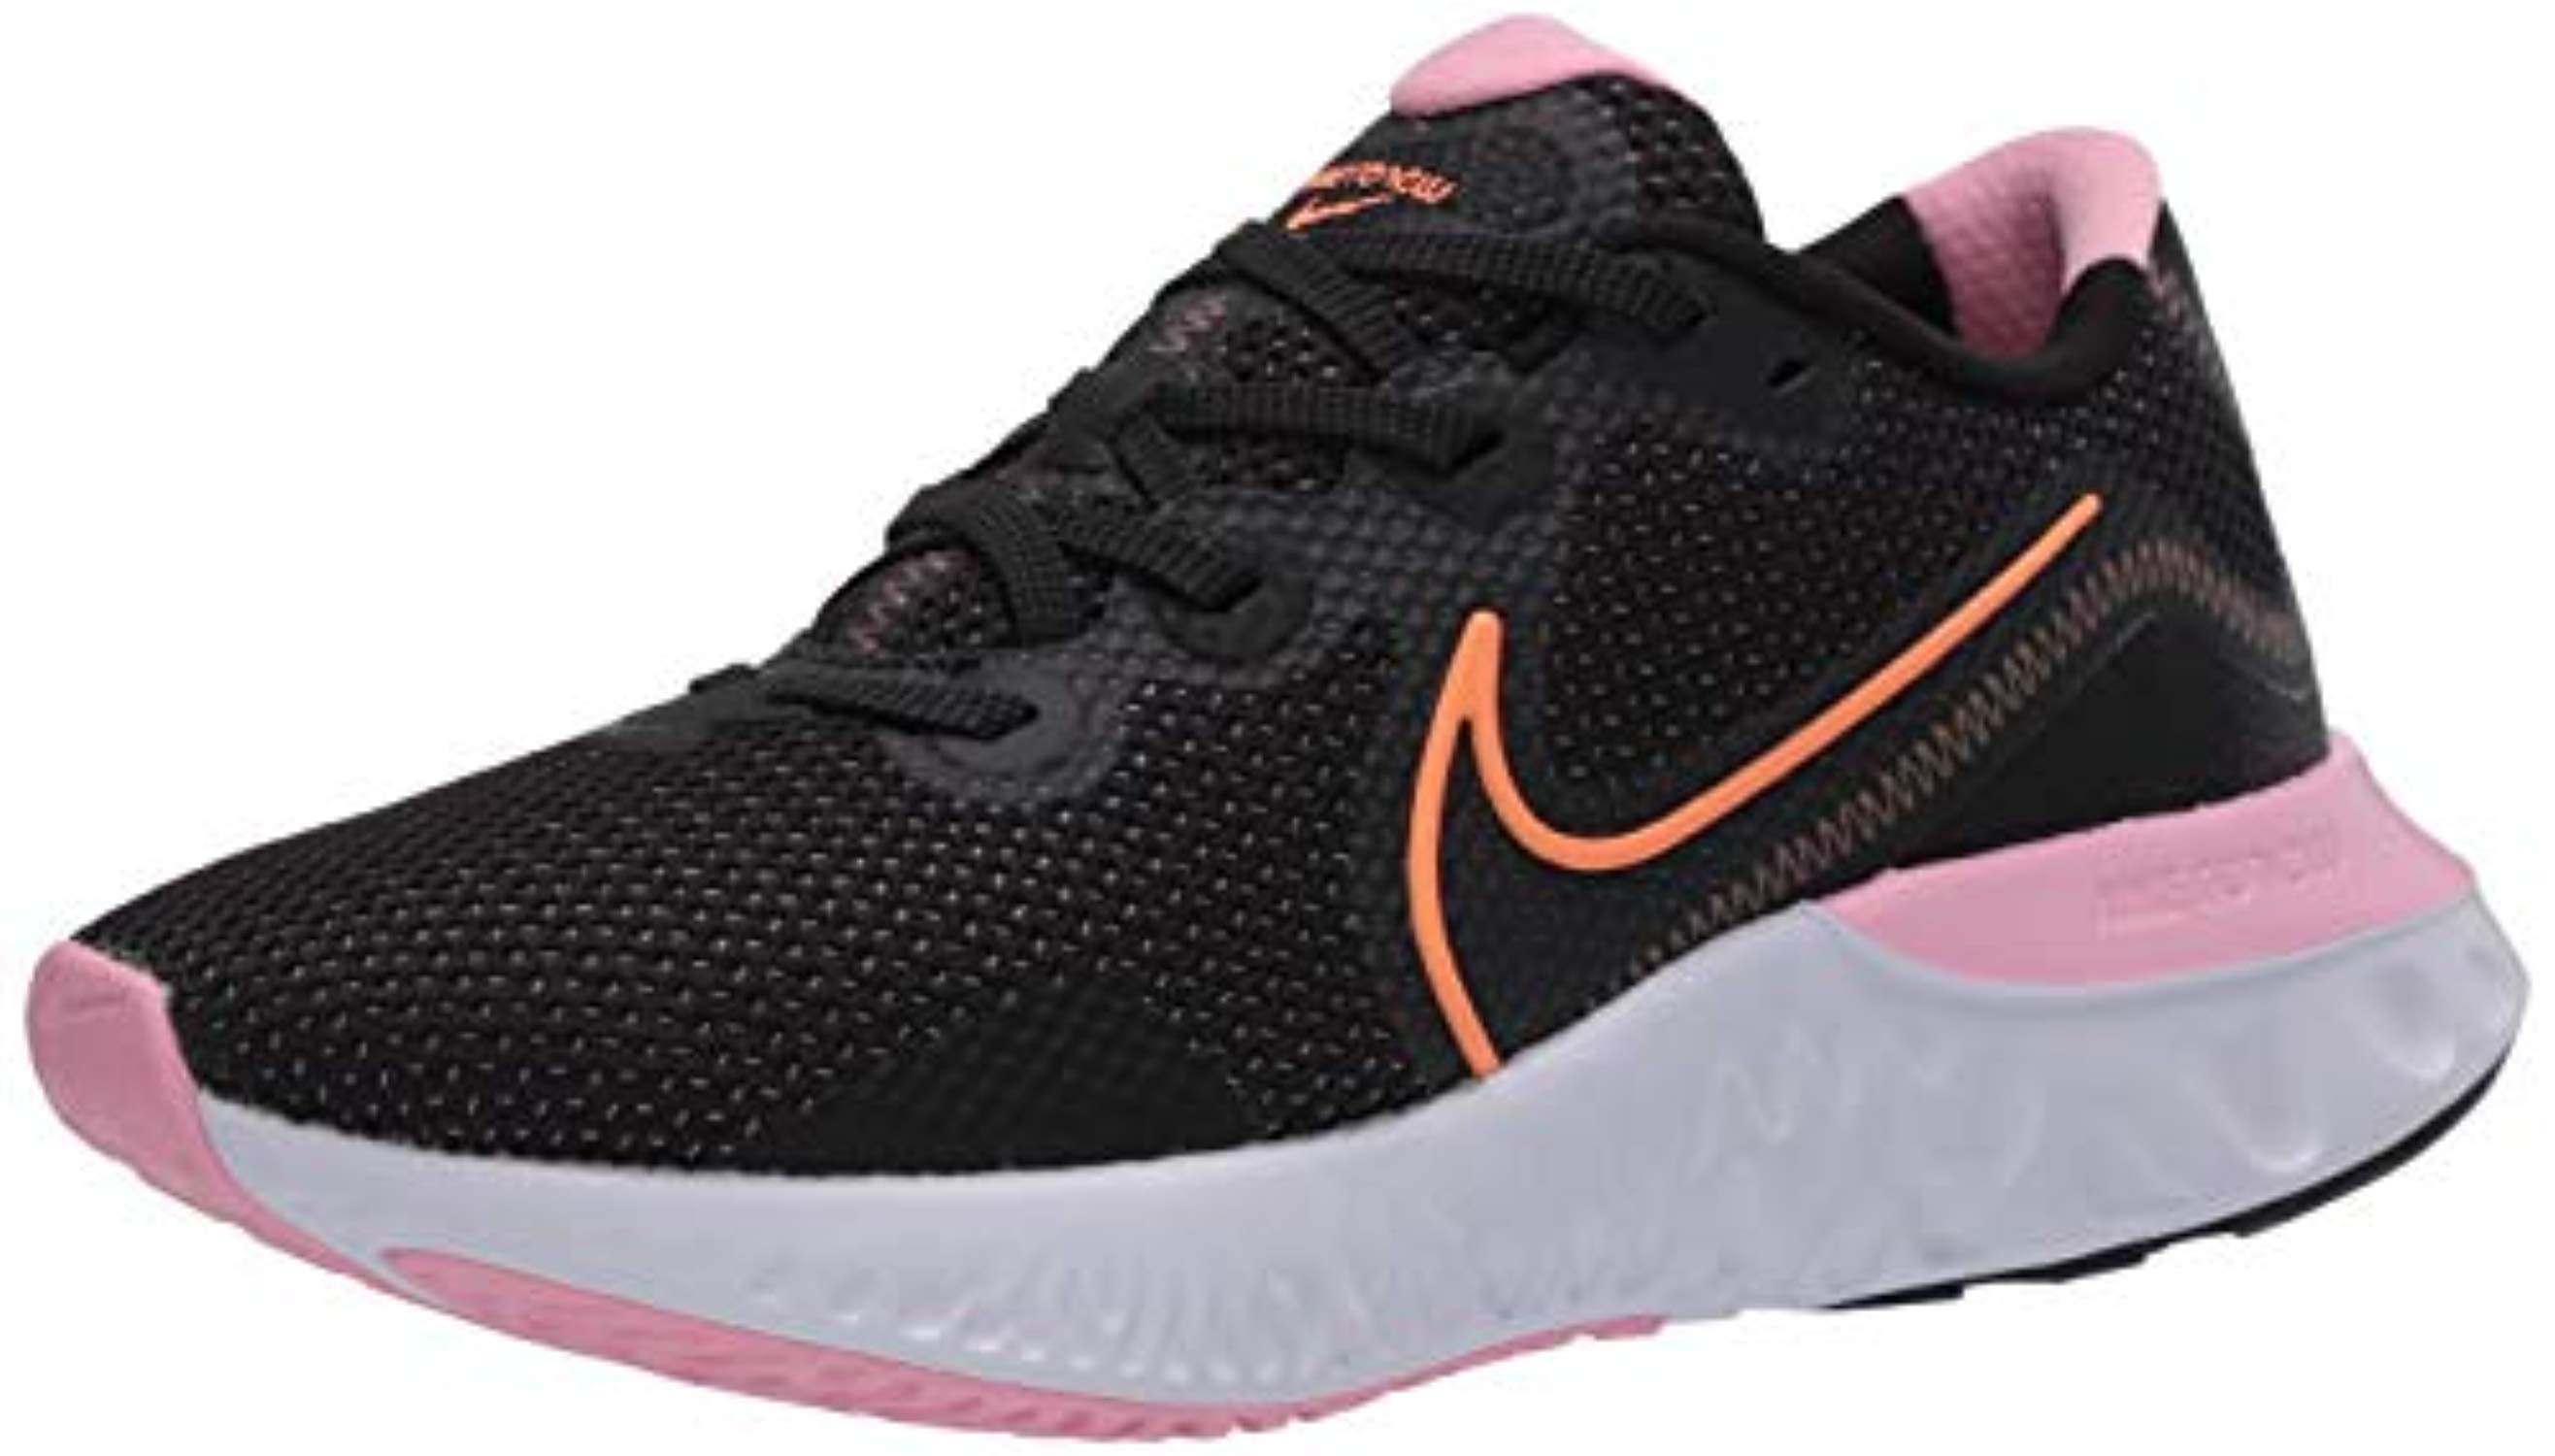 Nike Nike Women's Renew Run Running Shoes (Black/Pink/Orange, Numeric